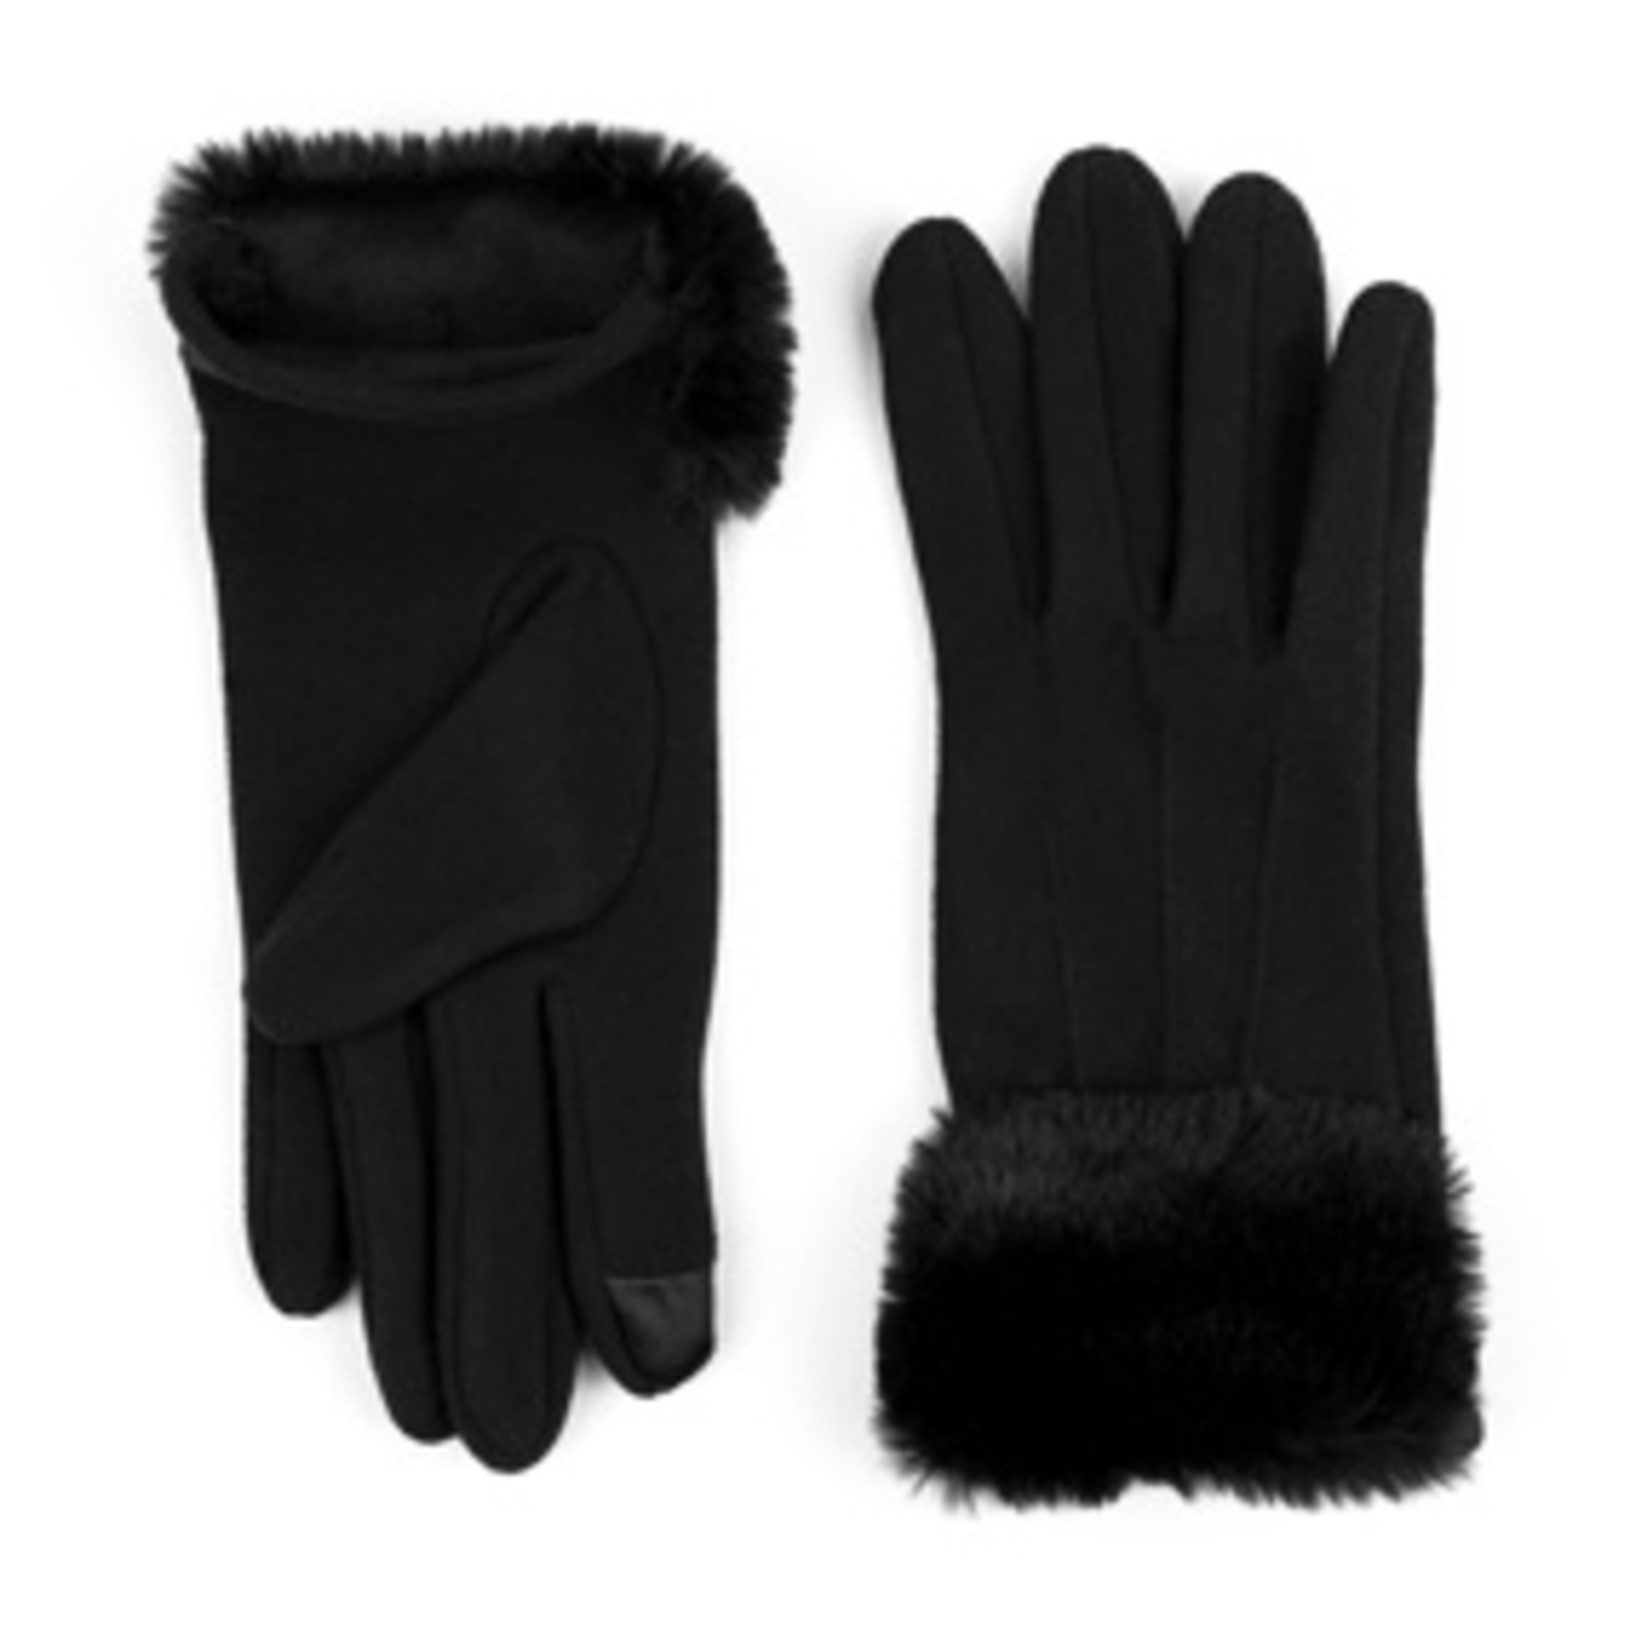 Jack & Missy - Socialite Gloves